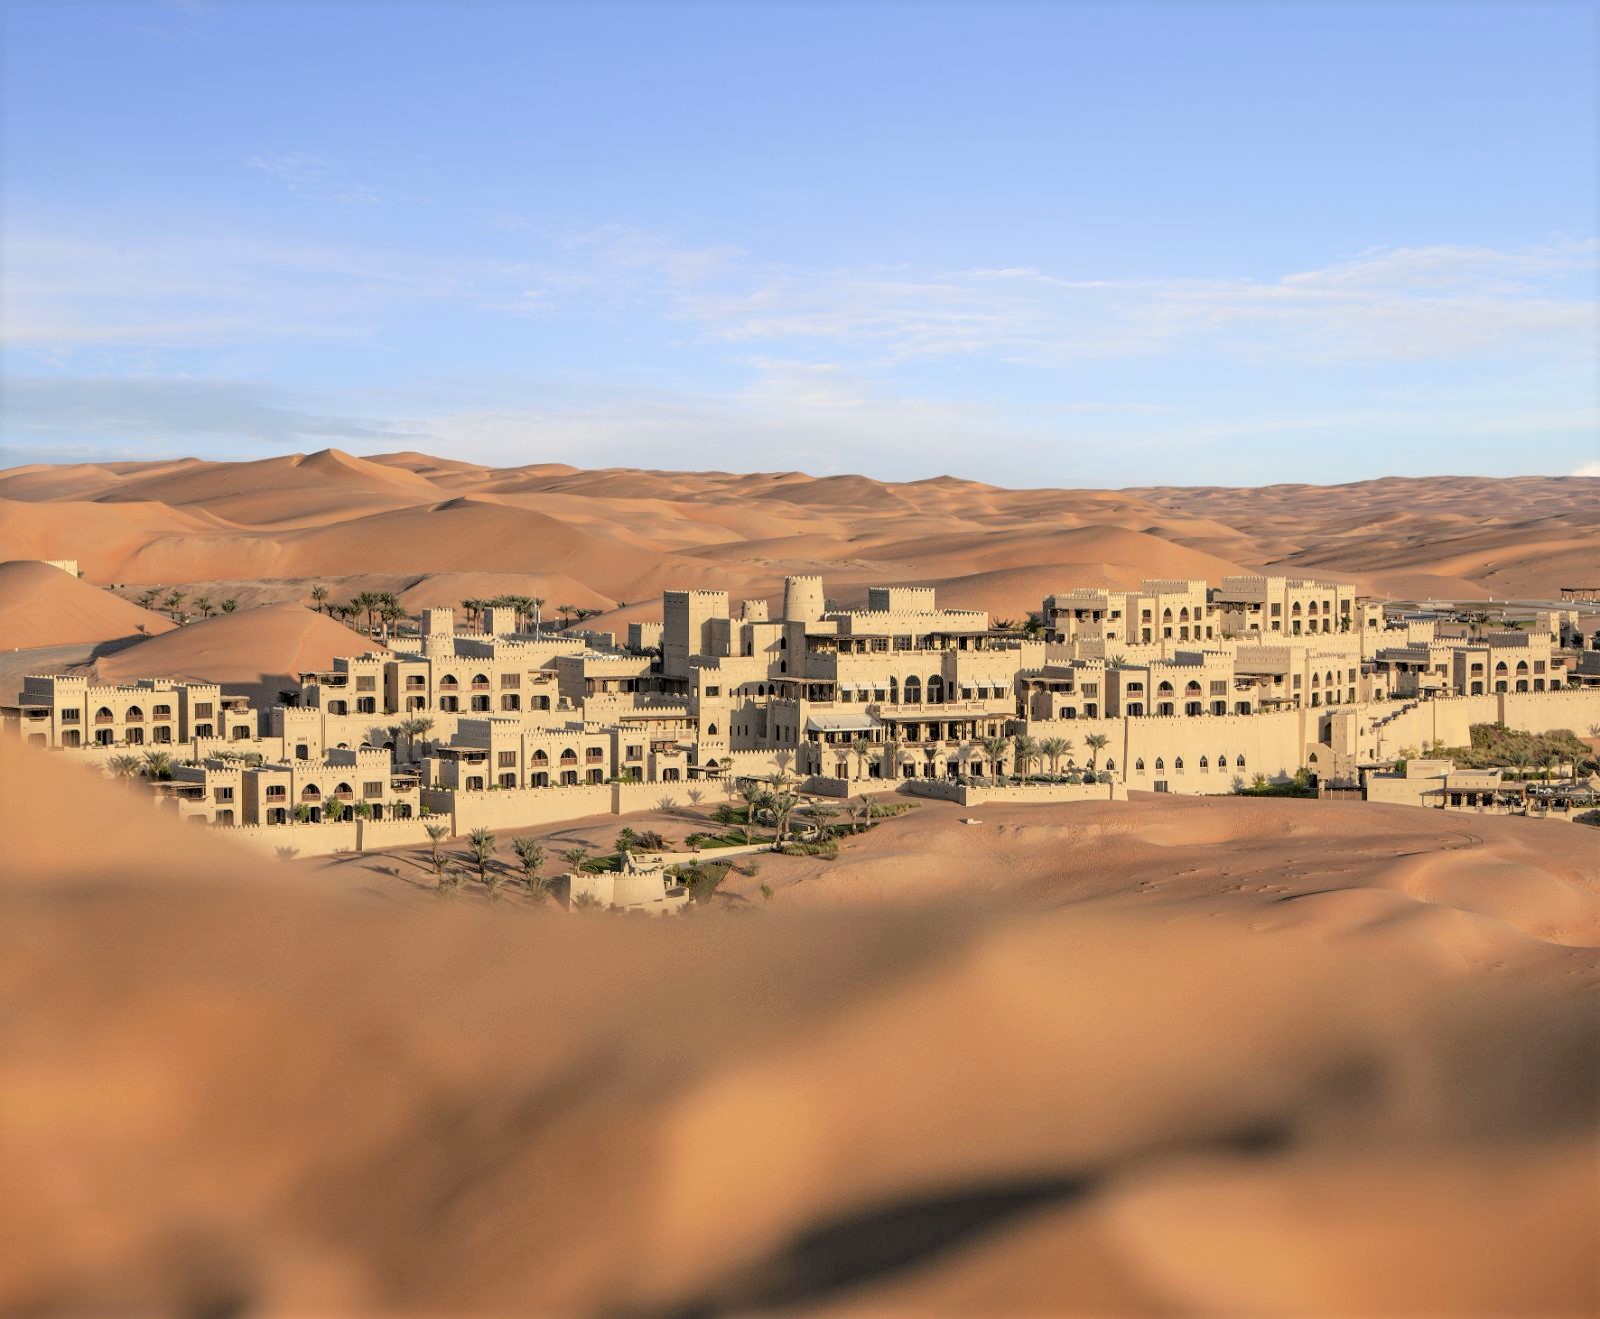 Aerial view of the Qasr Al Sarab Desert Resort in the United Arab Emirates